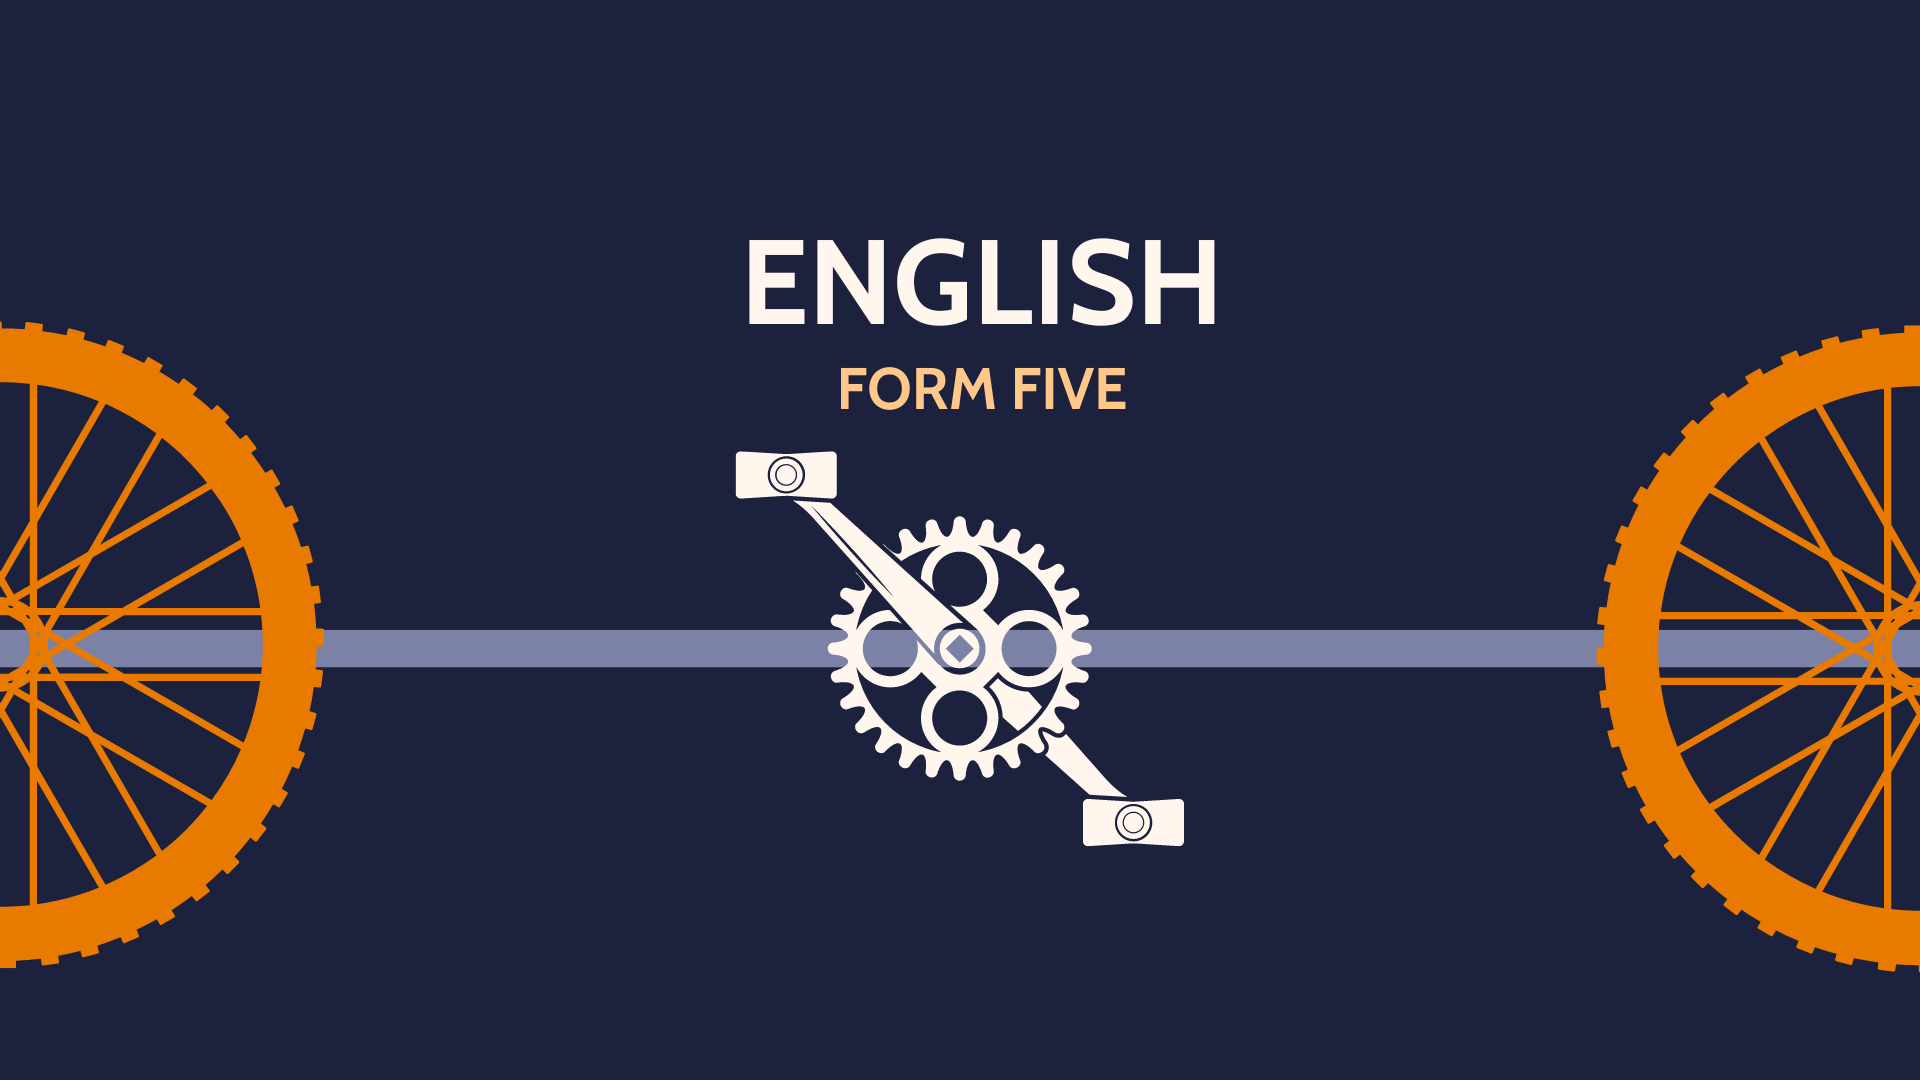 ENGLISH FORM FIVE